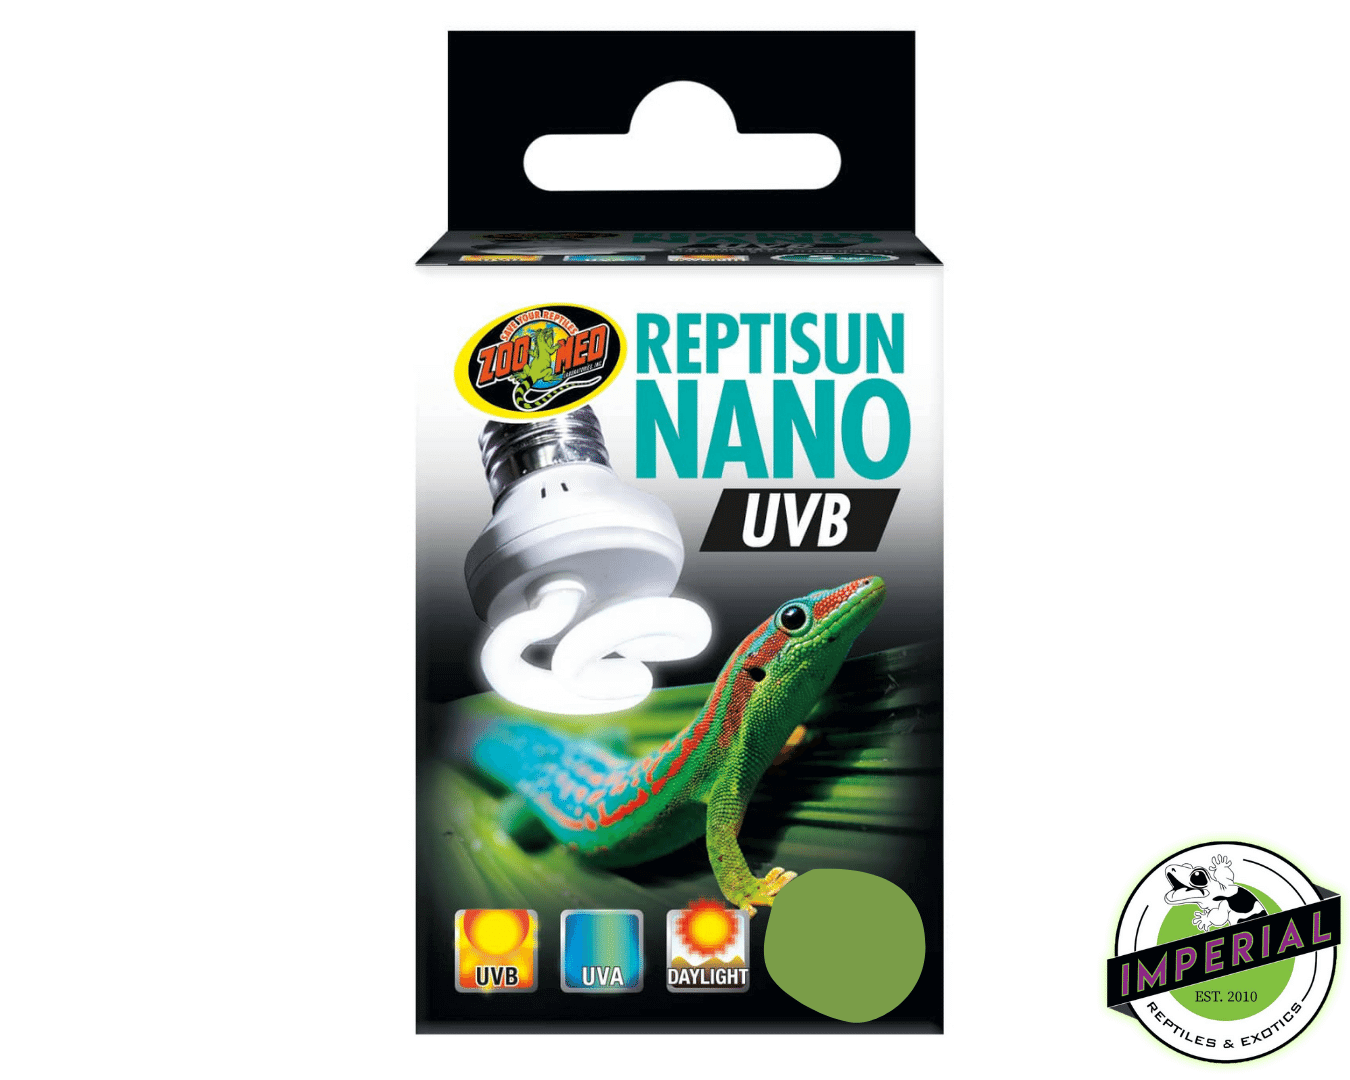 nano uvb light for sale online, buy cheap reptile supplies near me